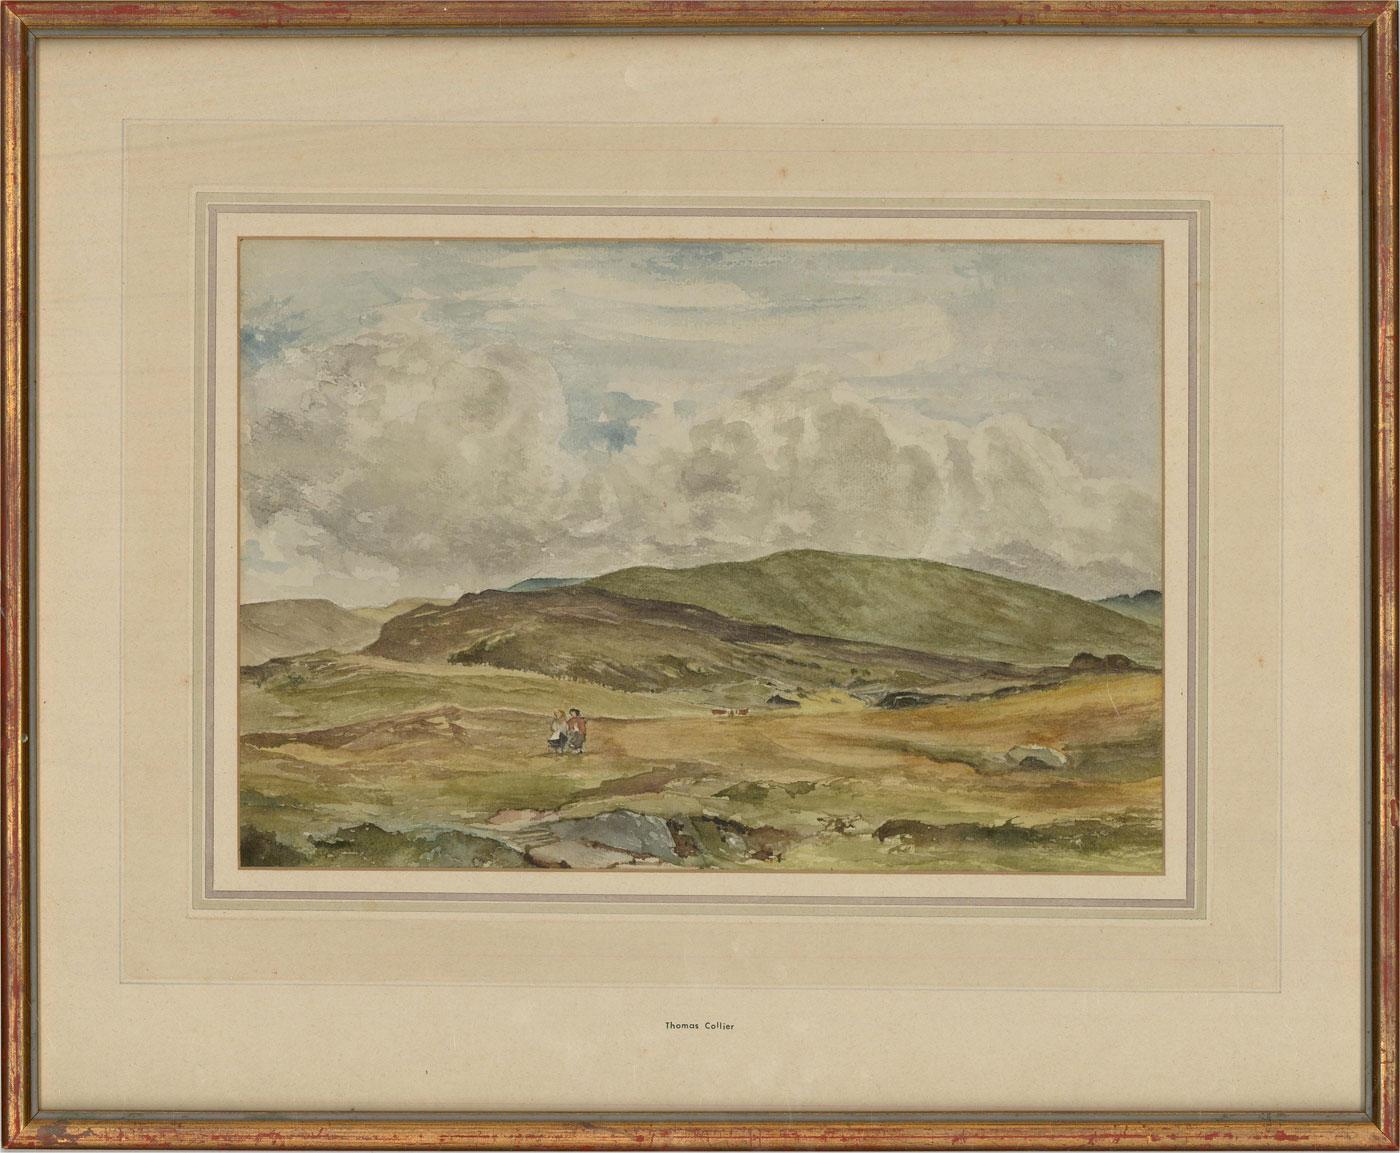 Thomas Collier RI Landscape Art - Manner of Thomas Collier - Mid 19th Century Watercolour, Moorland Landscape